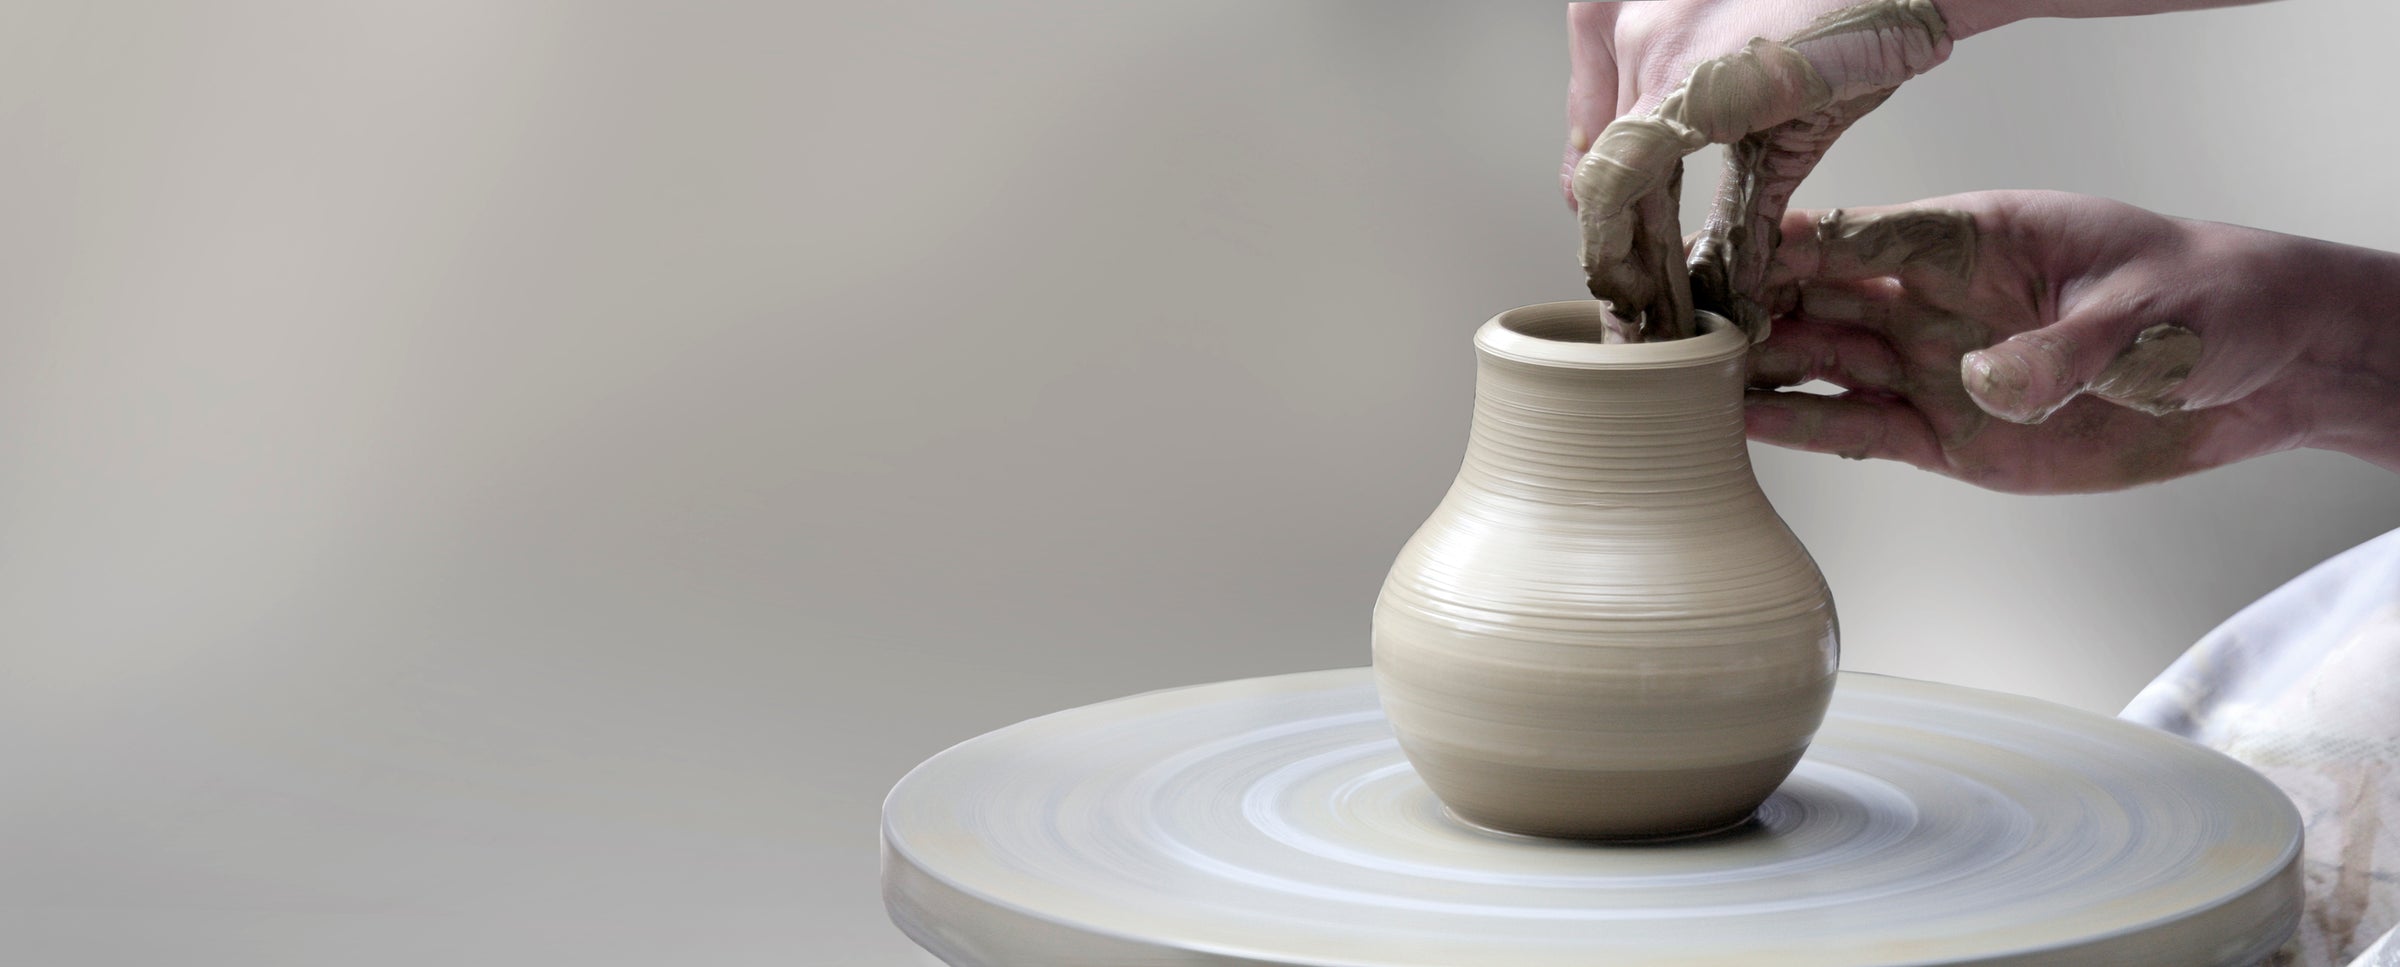 Handcrafted designer vases: Luxury accessories for interior decor.